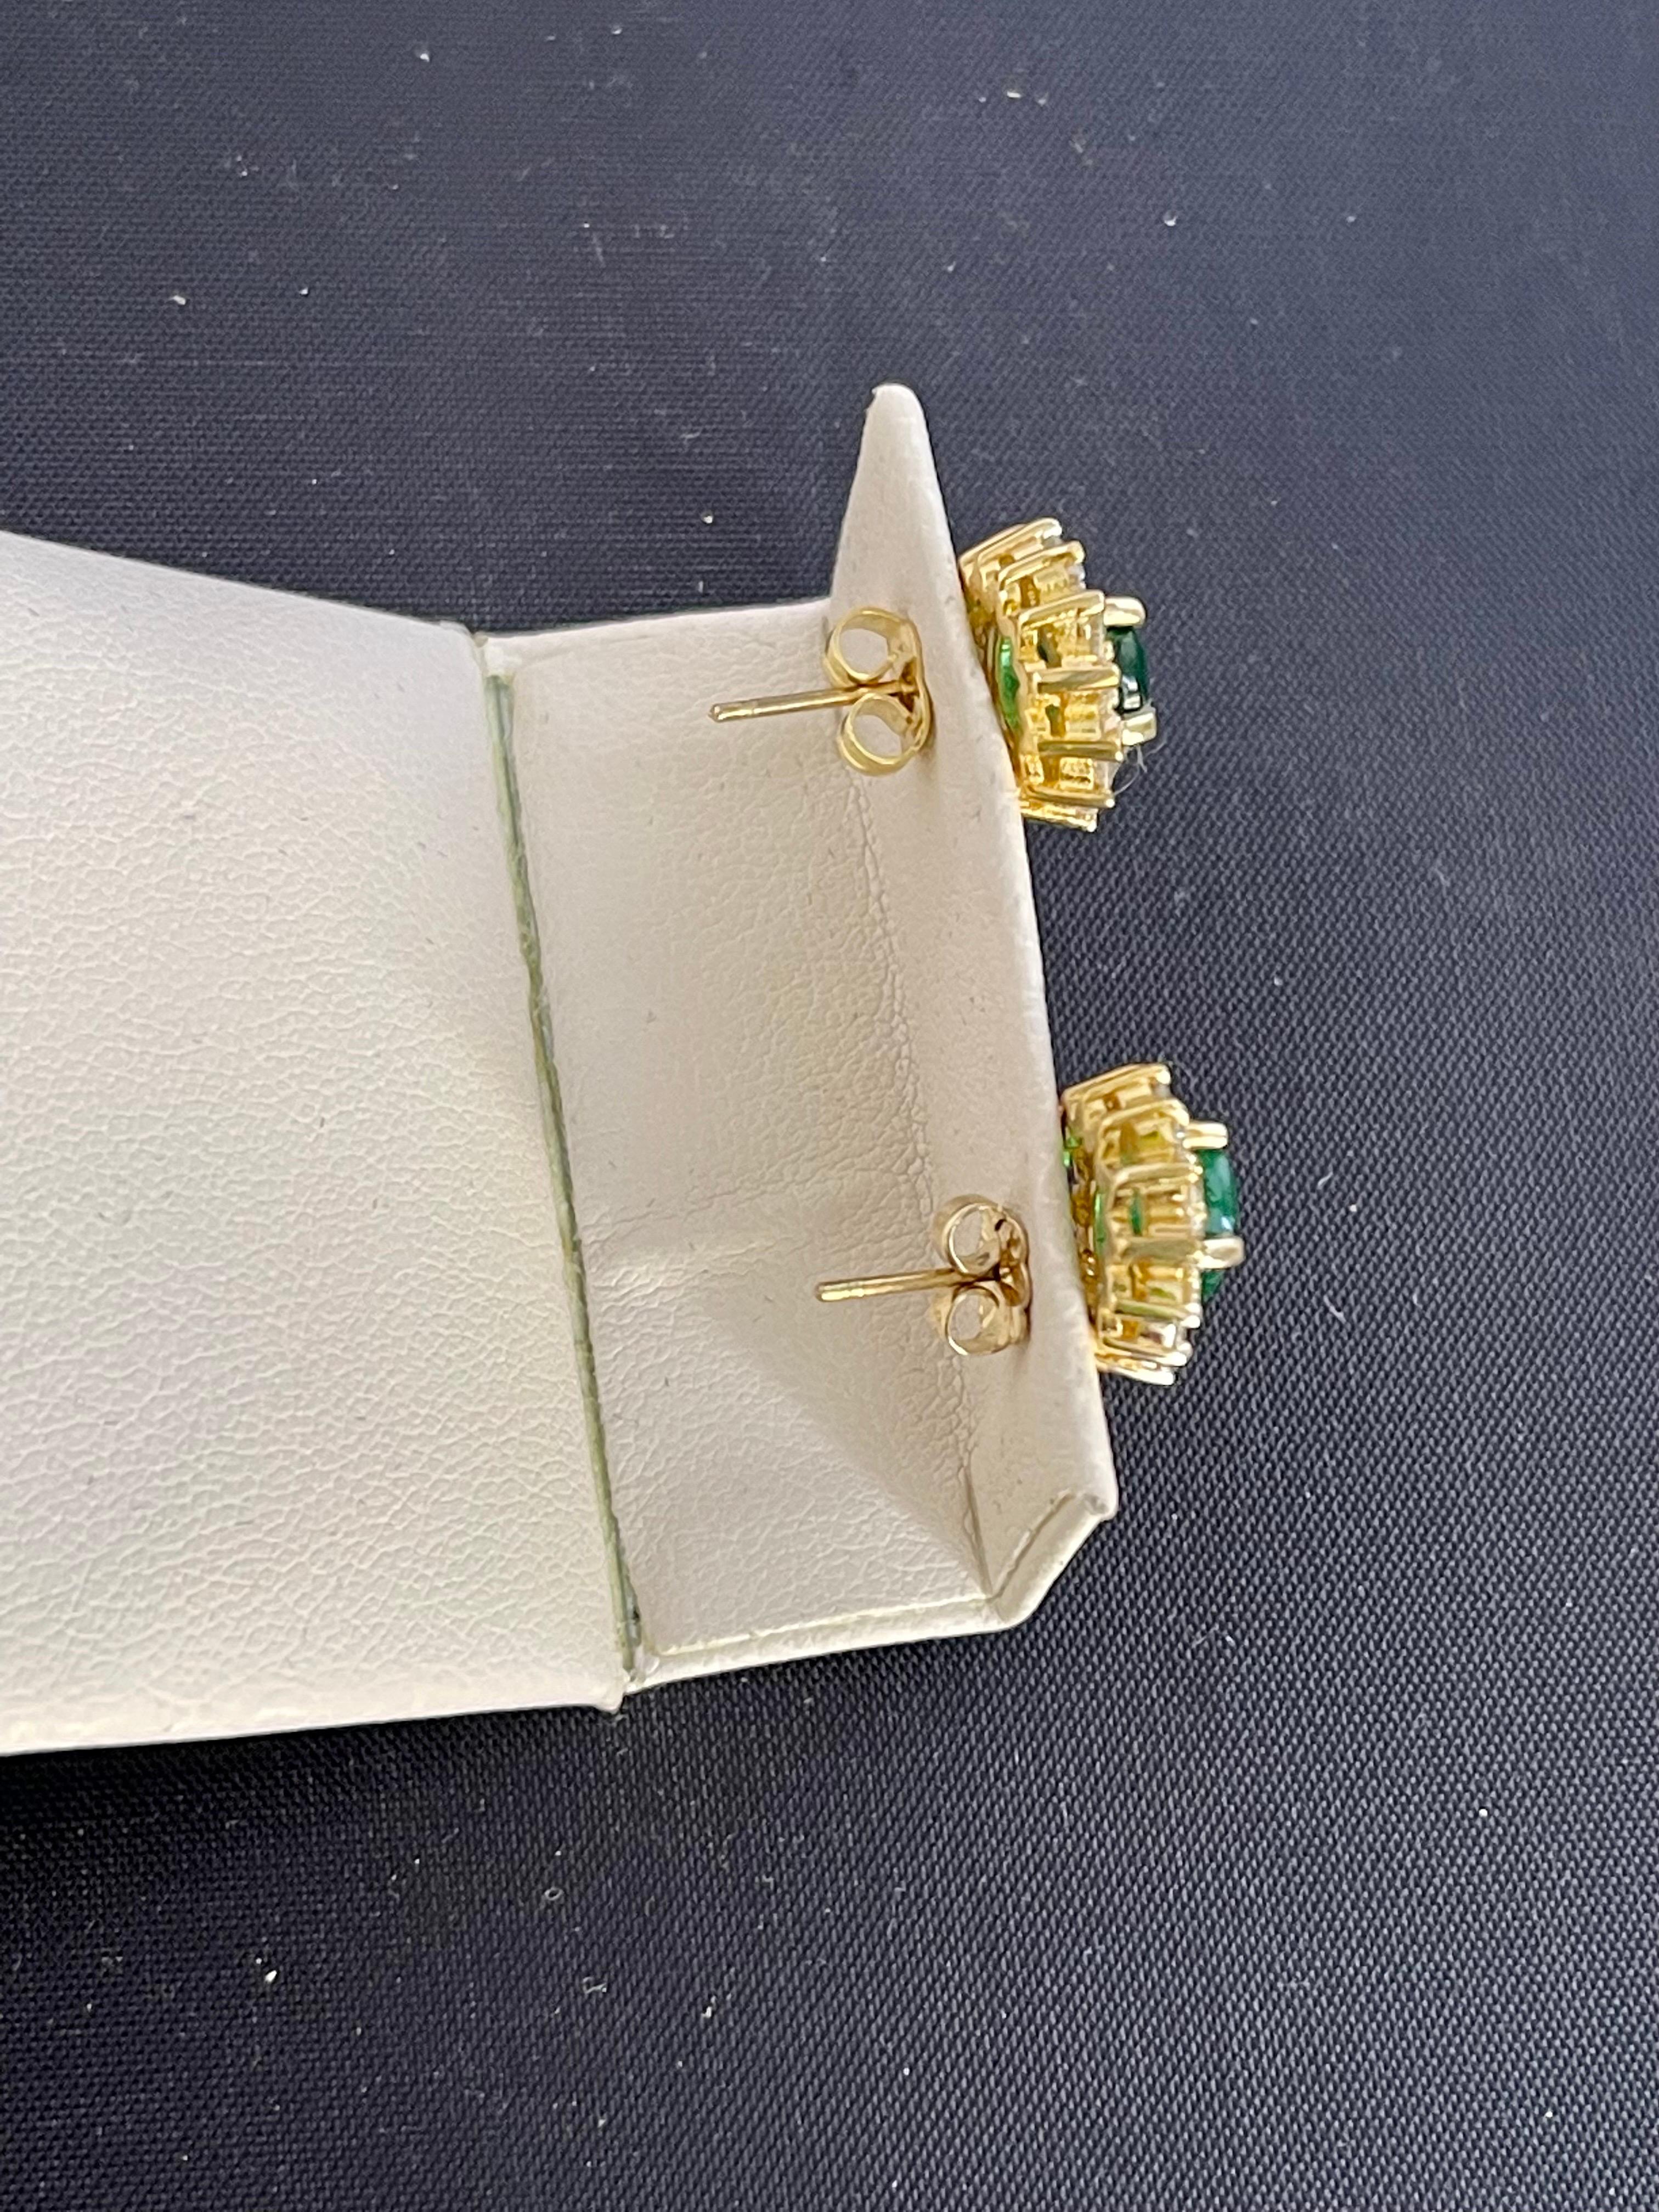 4 Carat Oval Shape Emerald and Diamond Post Back Earrings 14 Karat Yellow Gold 7